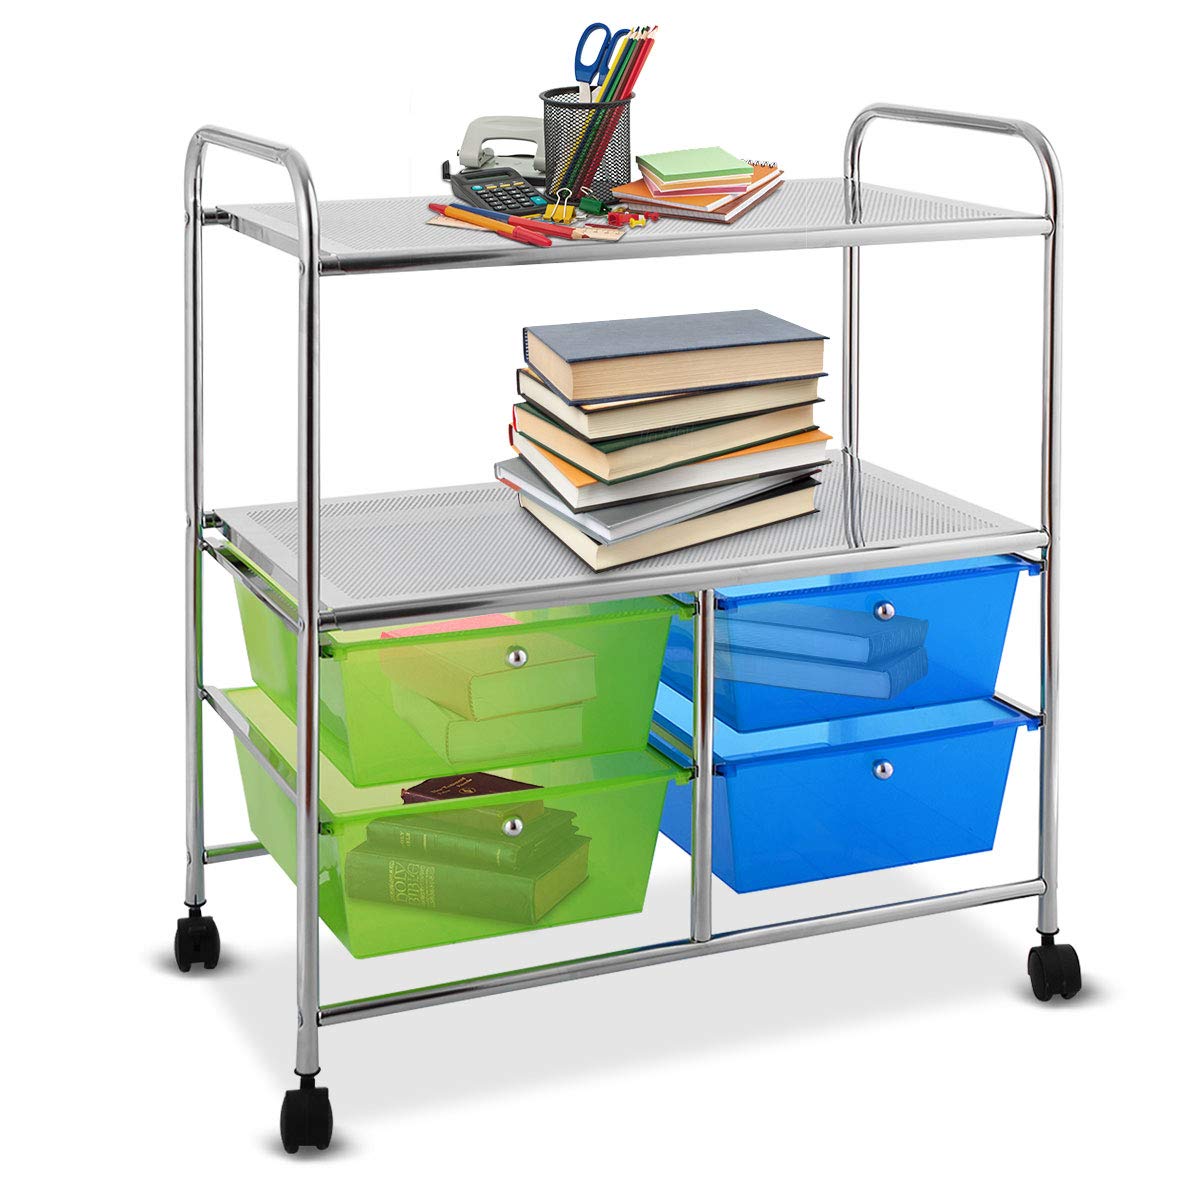 Giantex Rolling Storage Cart w/ 4 Drawers 2 Shelves Metal Rack Shelf Home Office School Beauty Salon Utility Organizer Cart with Wheels (Blue & Green)